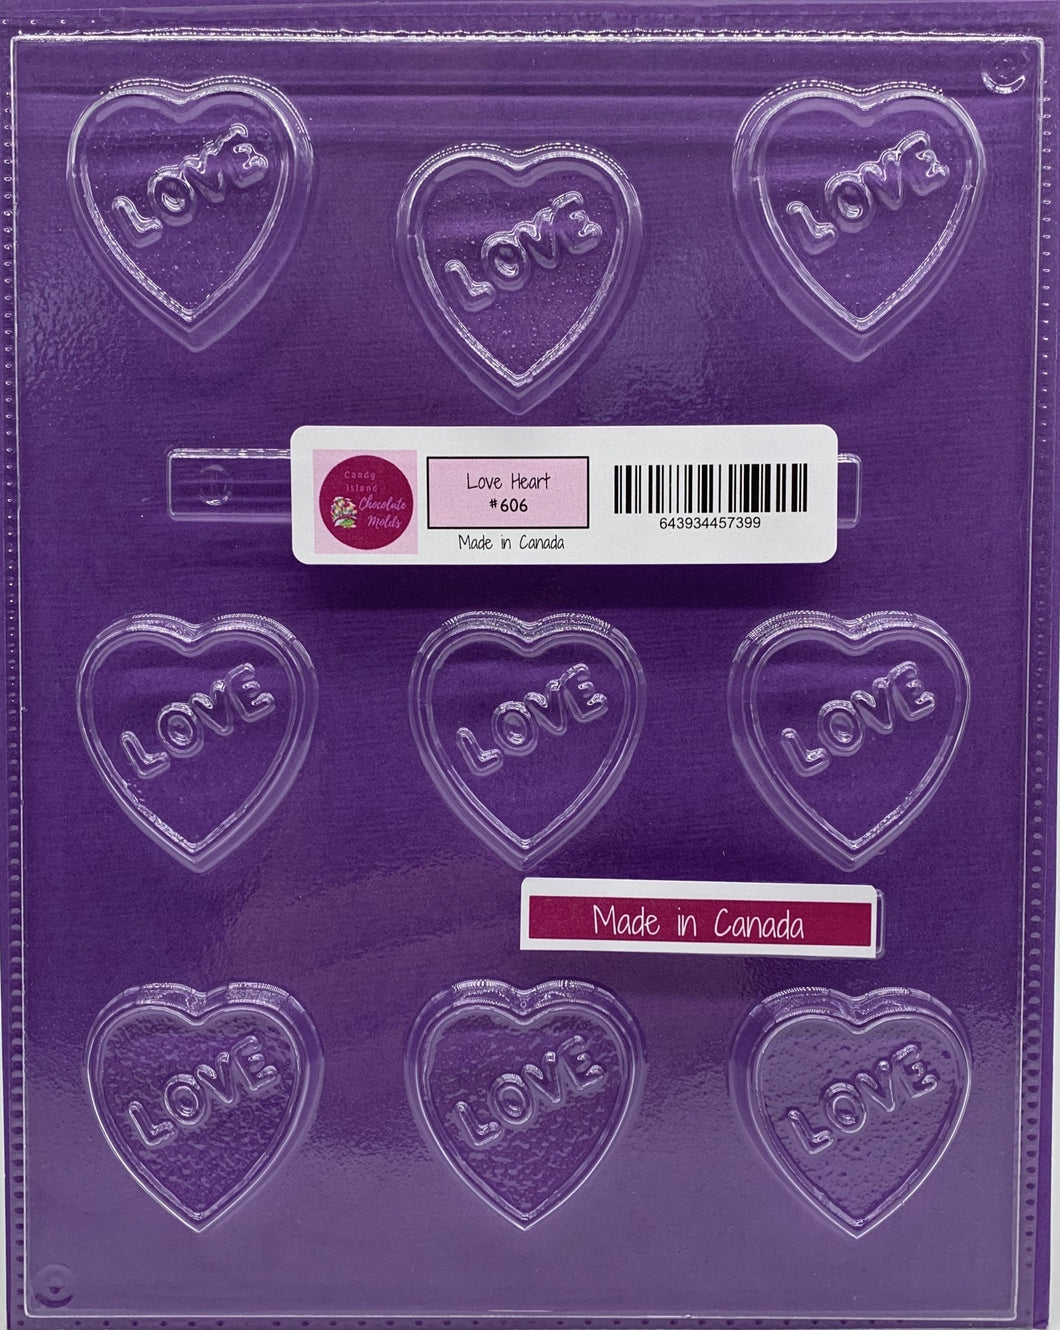 Candy Island Chocolate Mold #606 - Heart Love